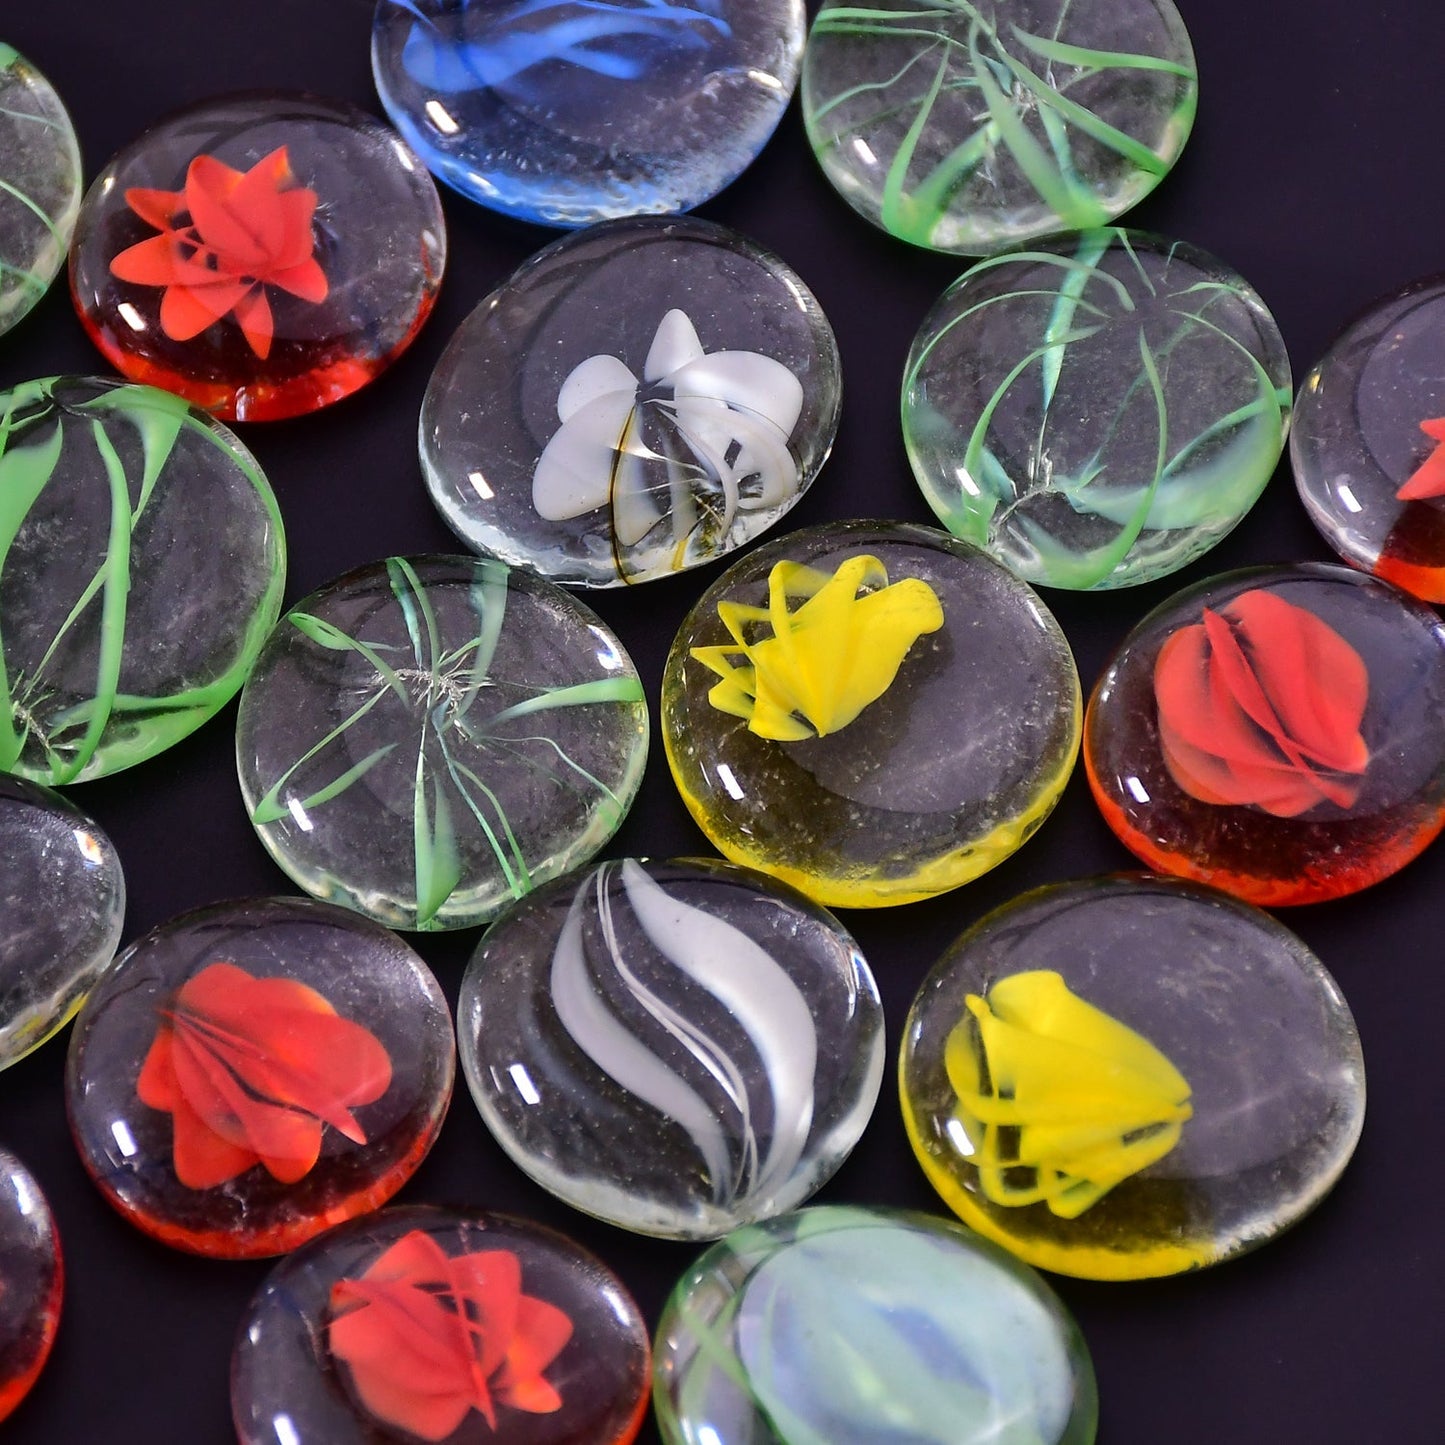 4019 Glass Gem Stone, Flat Round Marbles Pebbles for Vase Fillers, Attractive pebbles for Aquarium Fish Tank. DeoDap